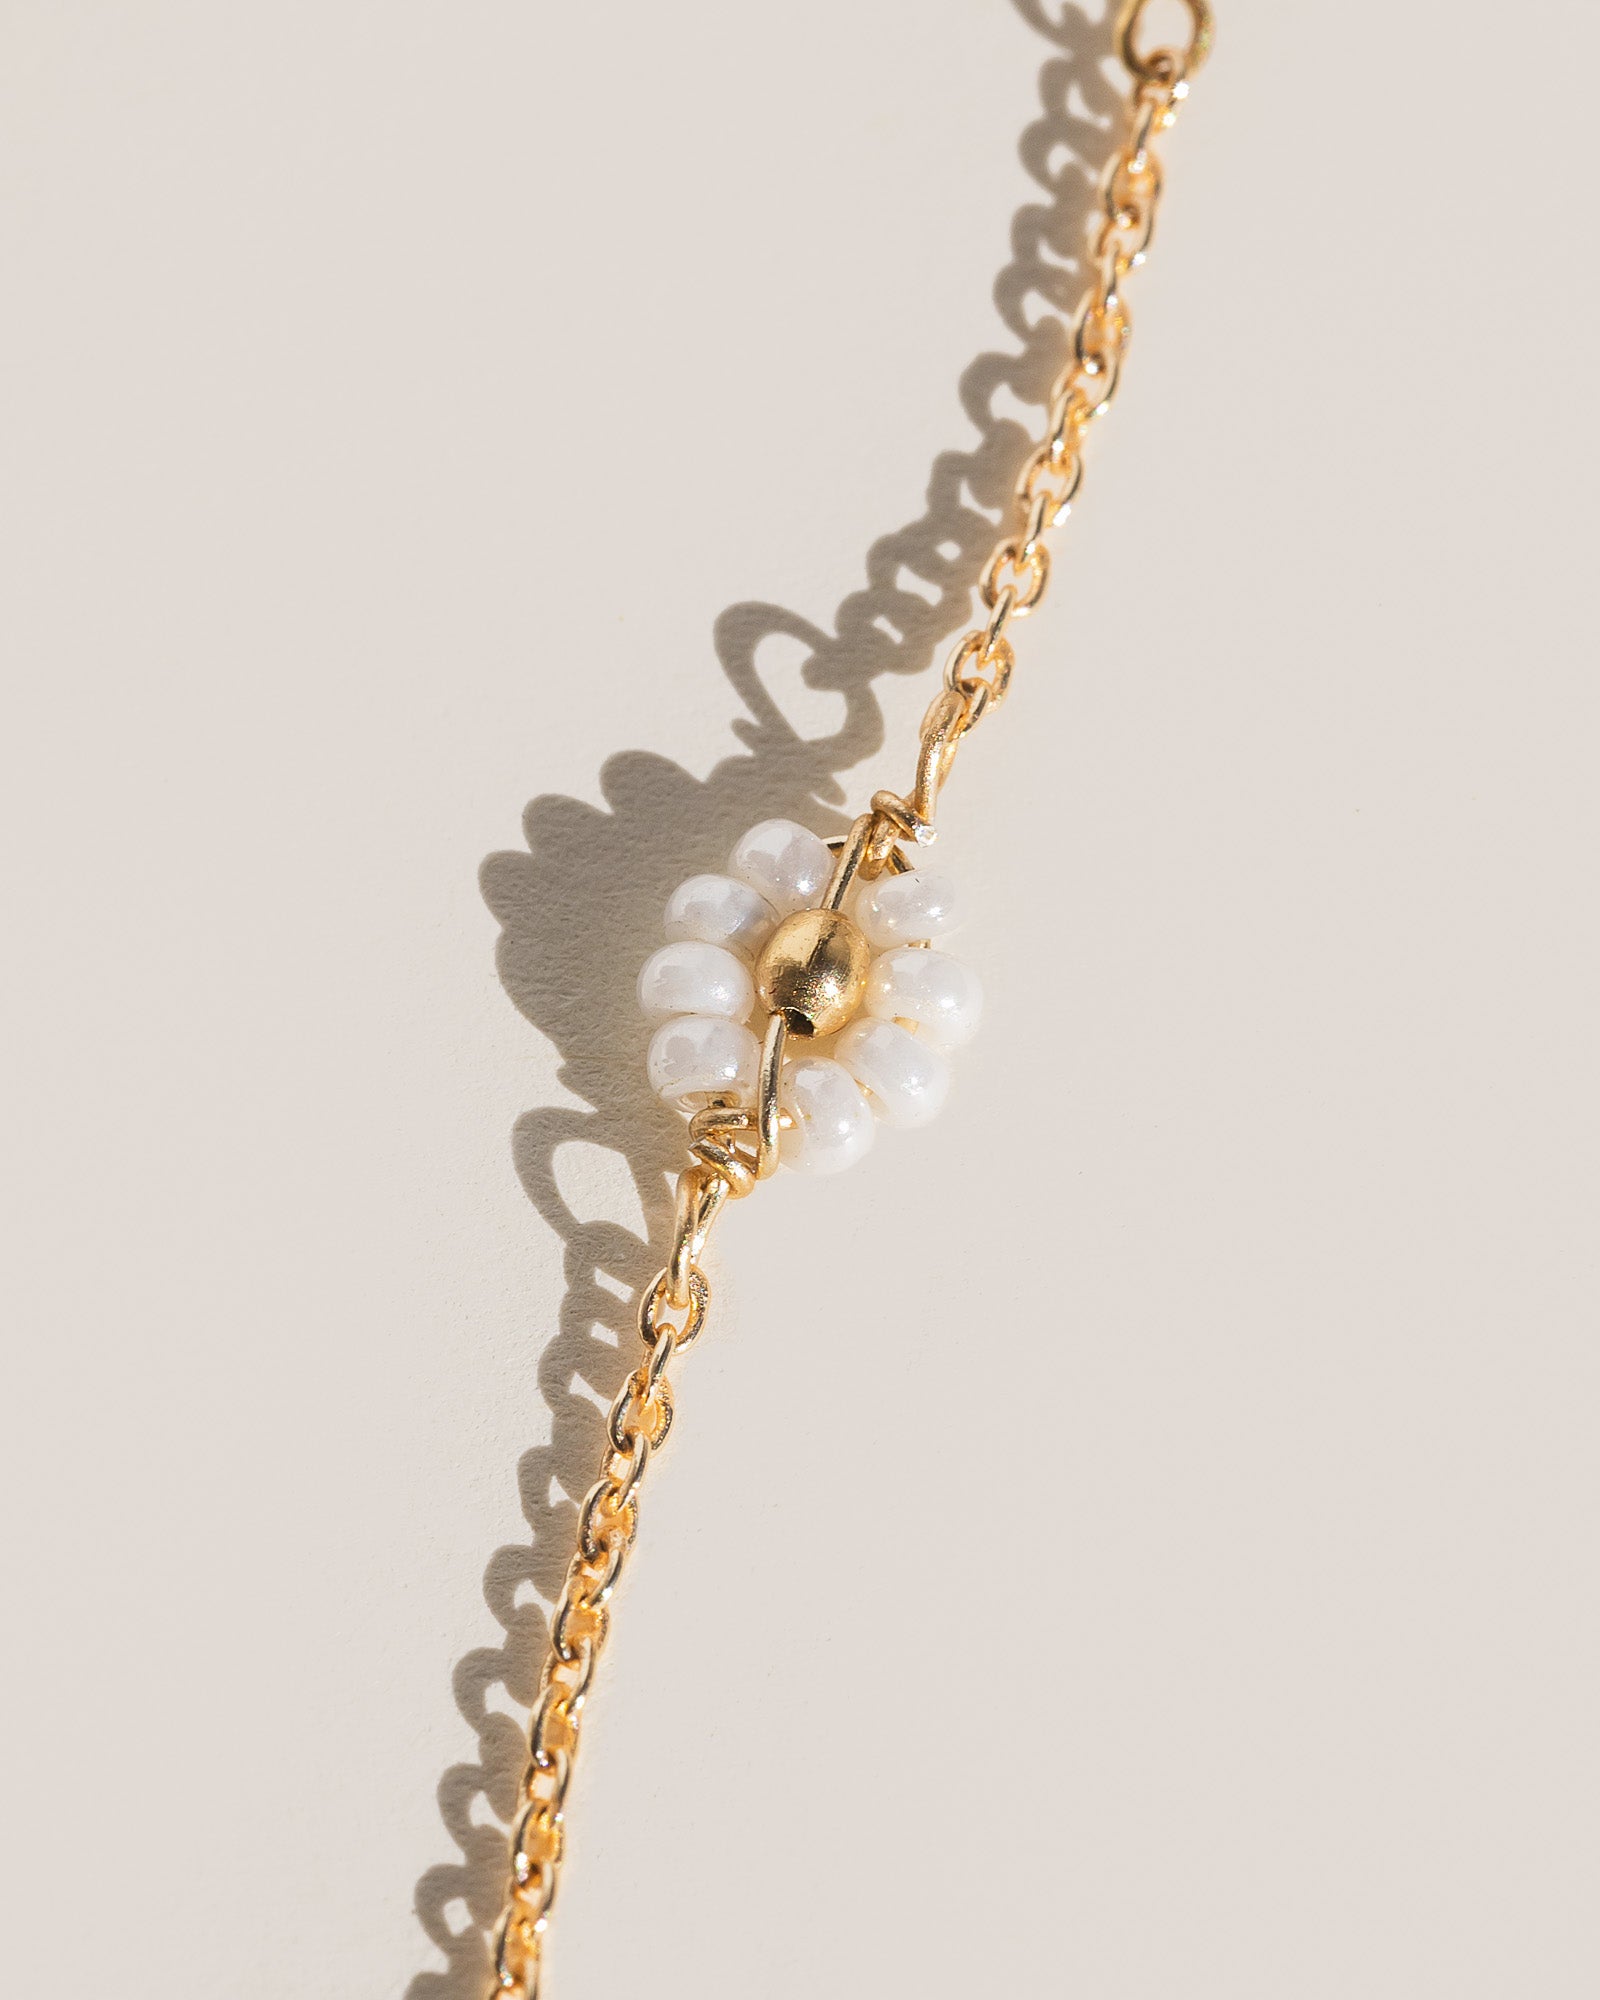 fair-trade-necklaces-daisy-chain-necklace-2.jpg